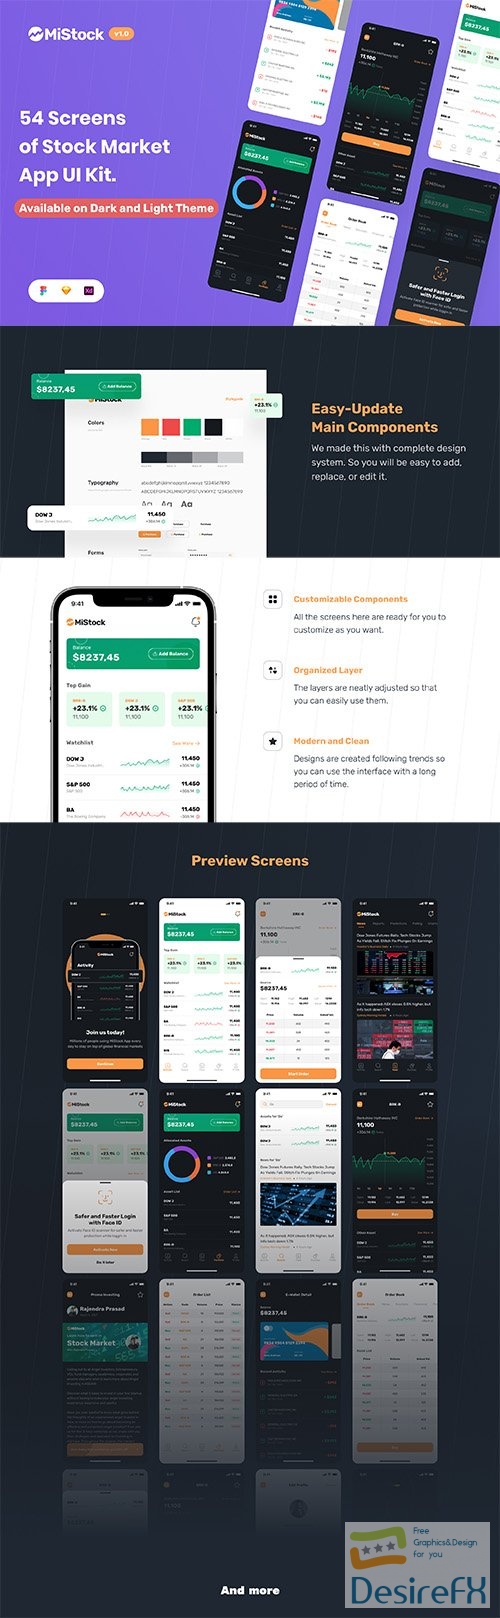 MiStock - Stock Market and Finance App UI Kit - UI8